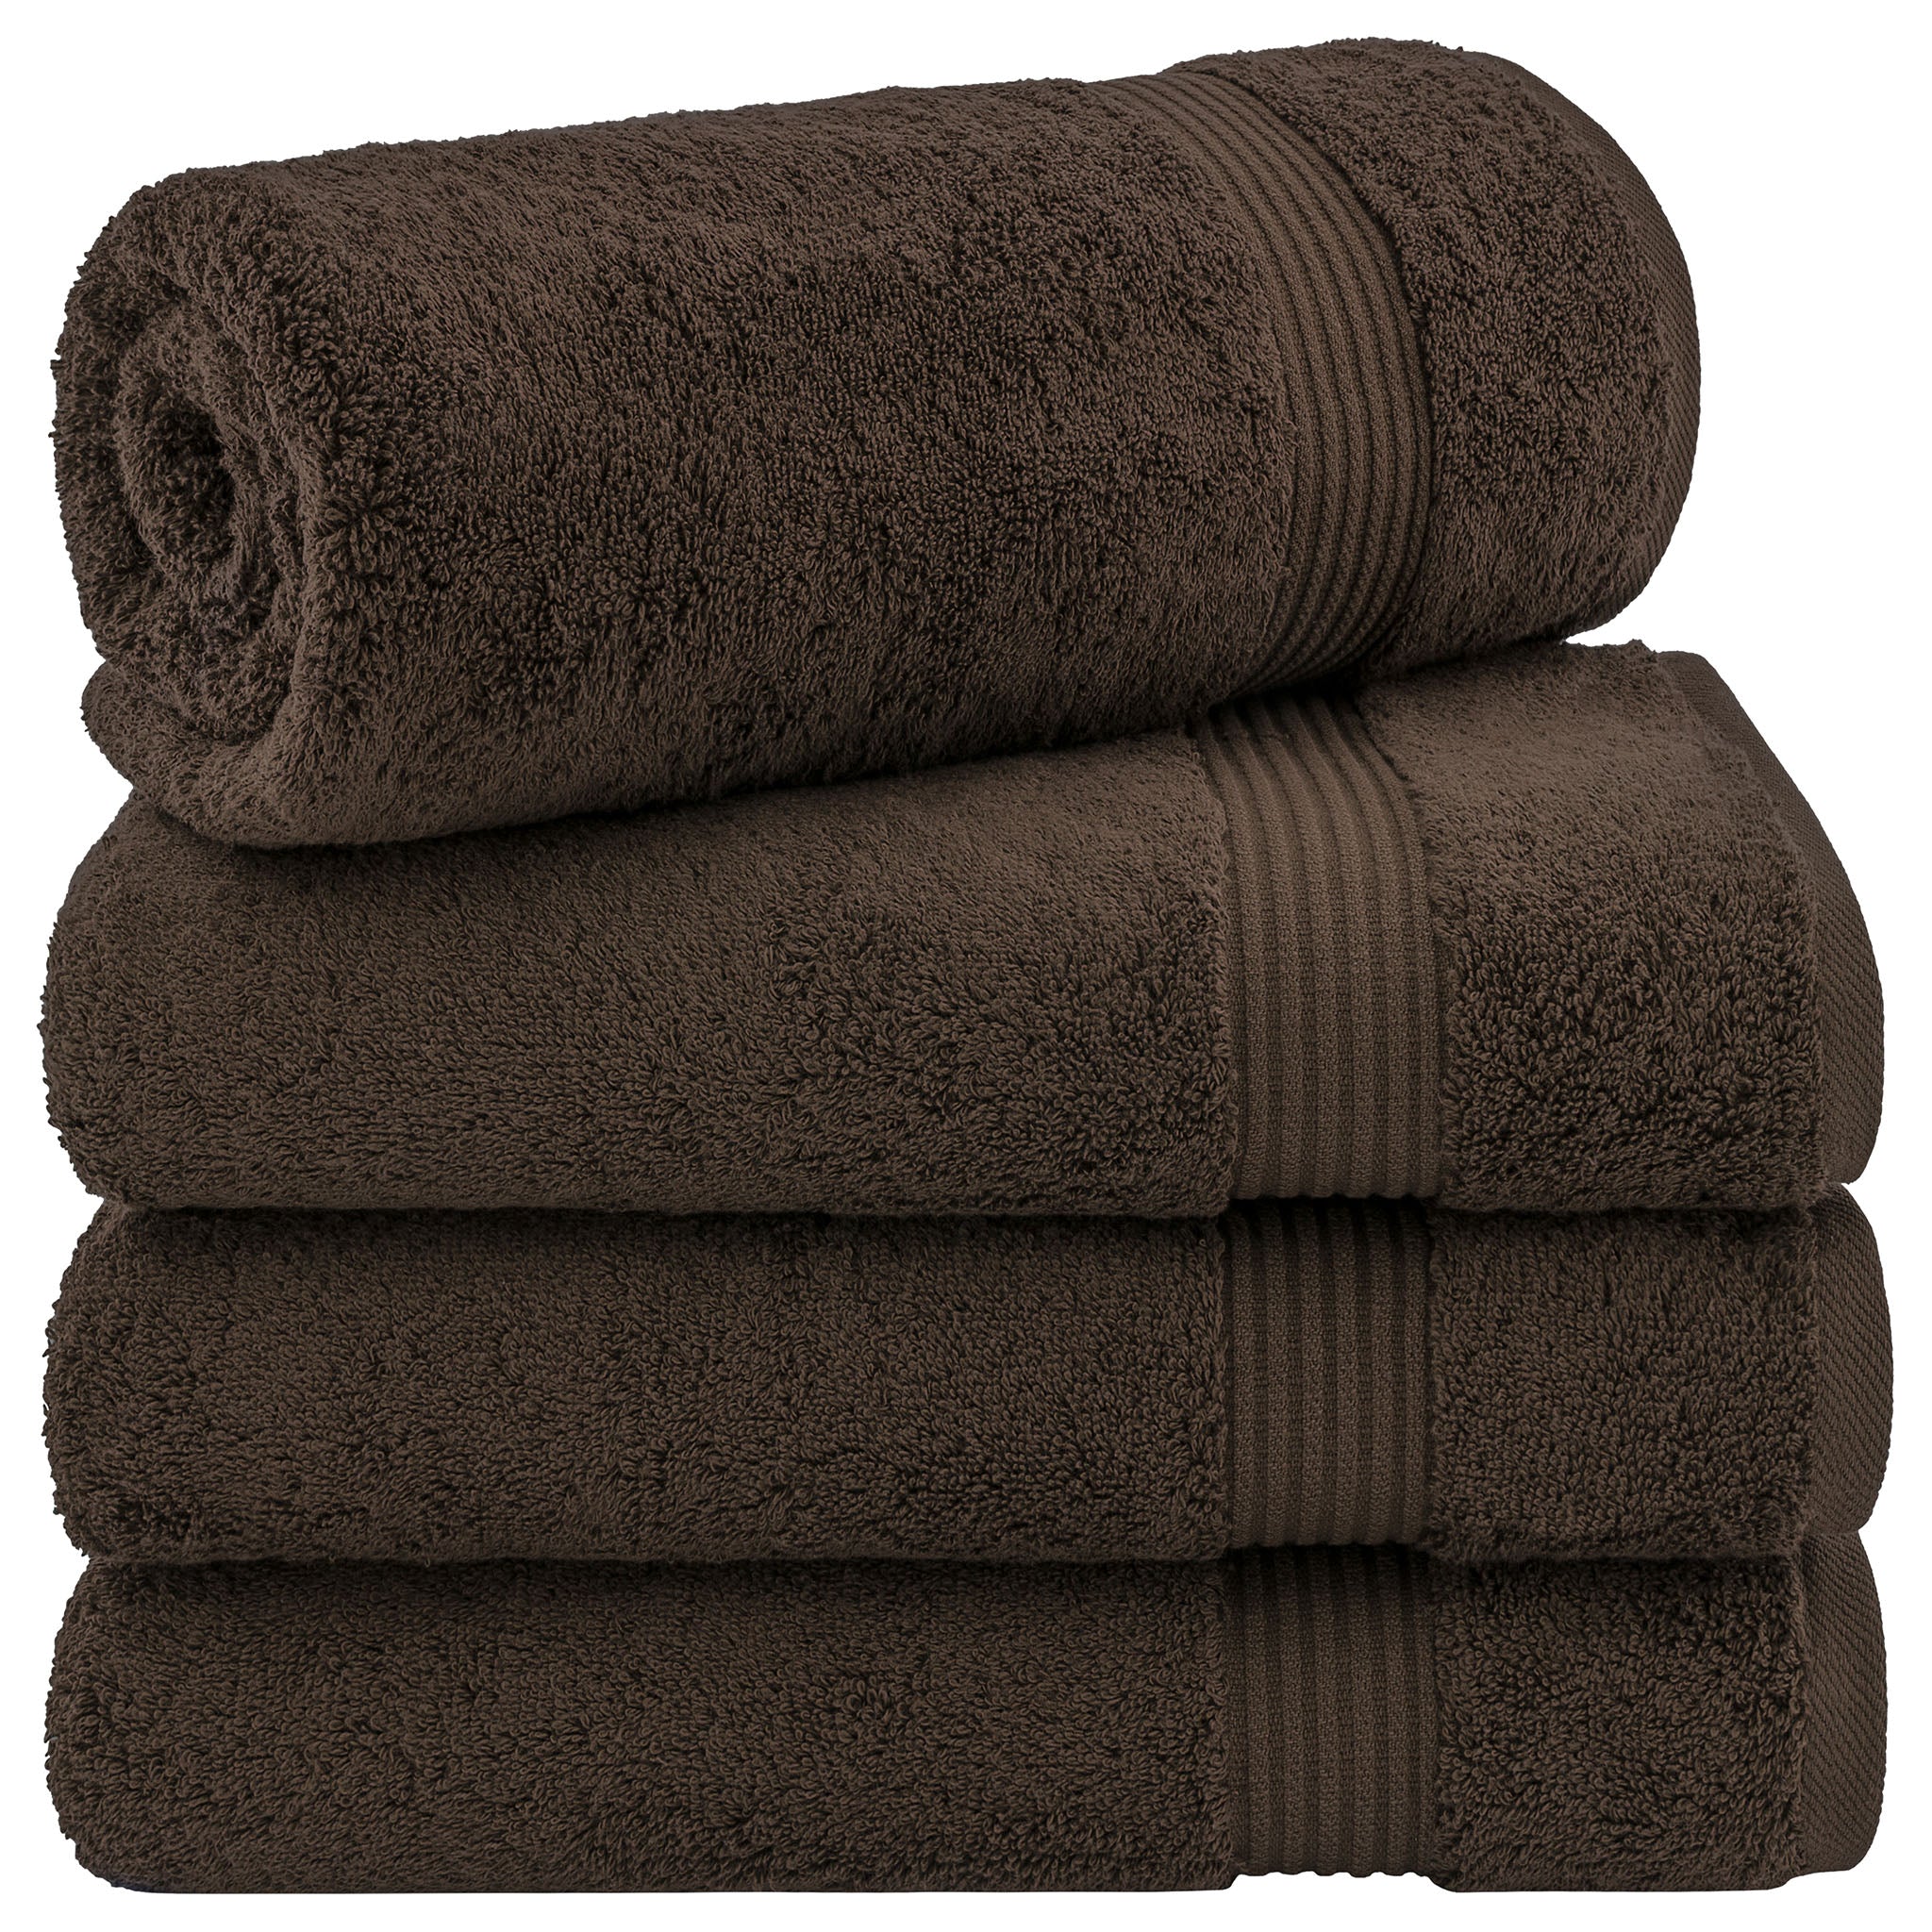 American Soft Linen Bekos 100% Cotton Turkish Towels, 4 Piece Bath Towel Set -chocolate-brown-01